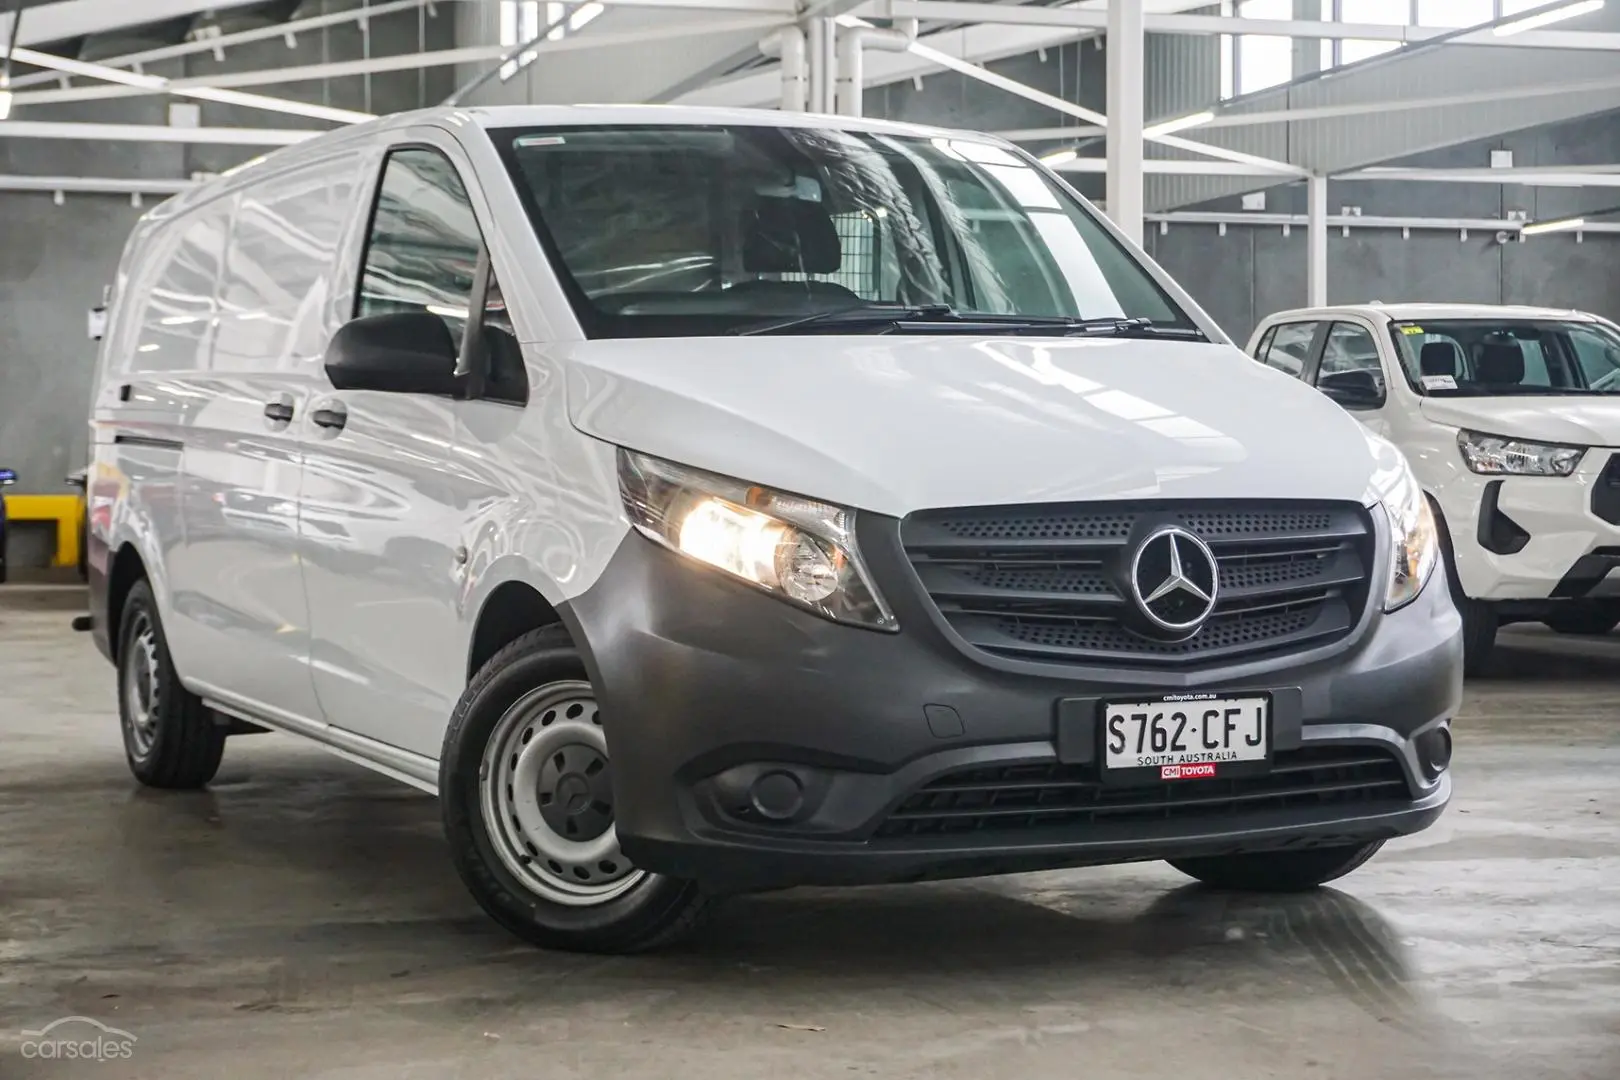 2019 Mercedes-Benz Vito Image 1